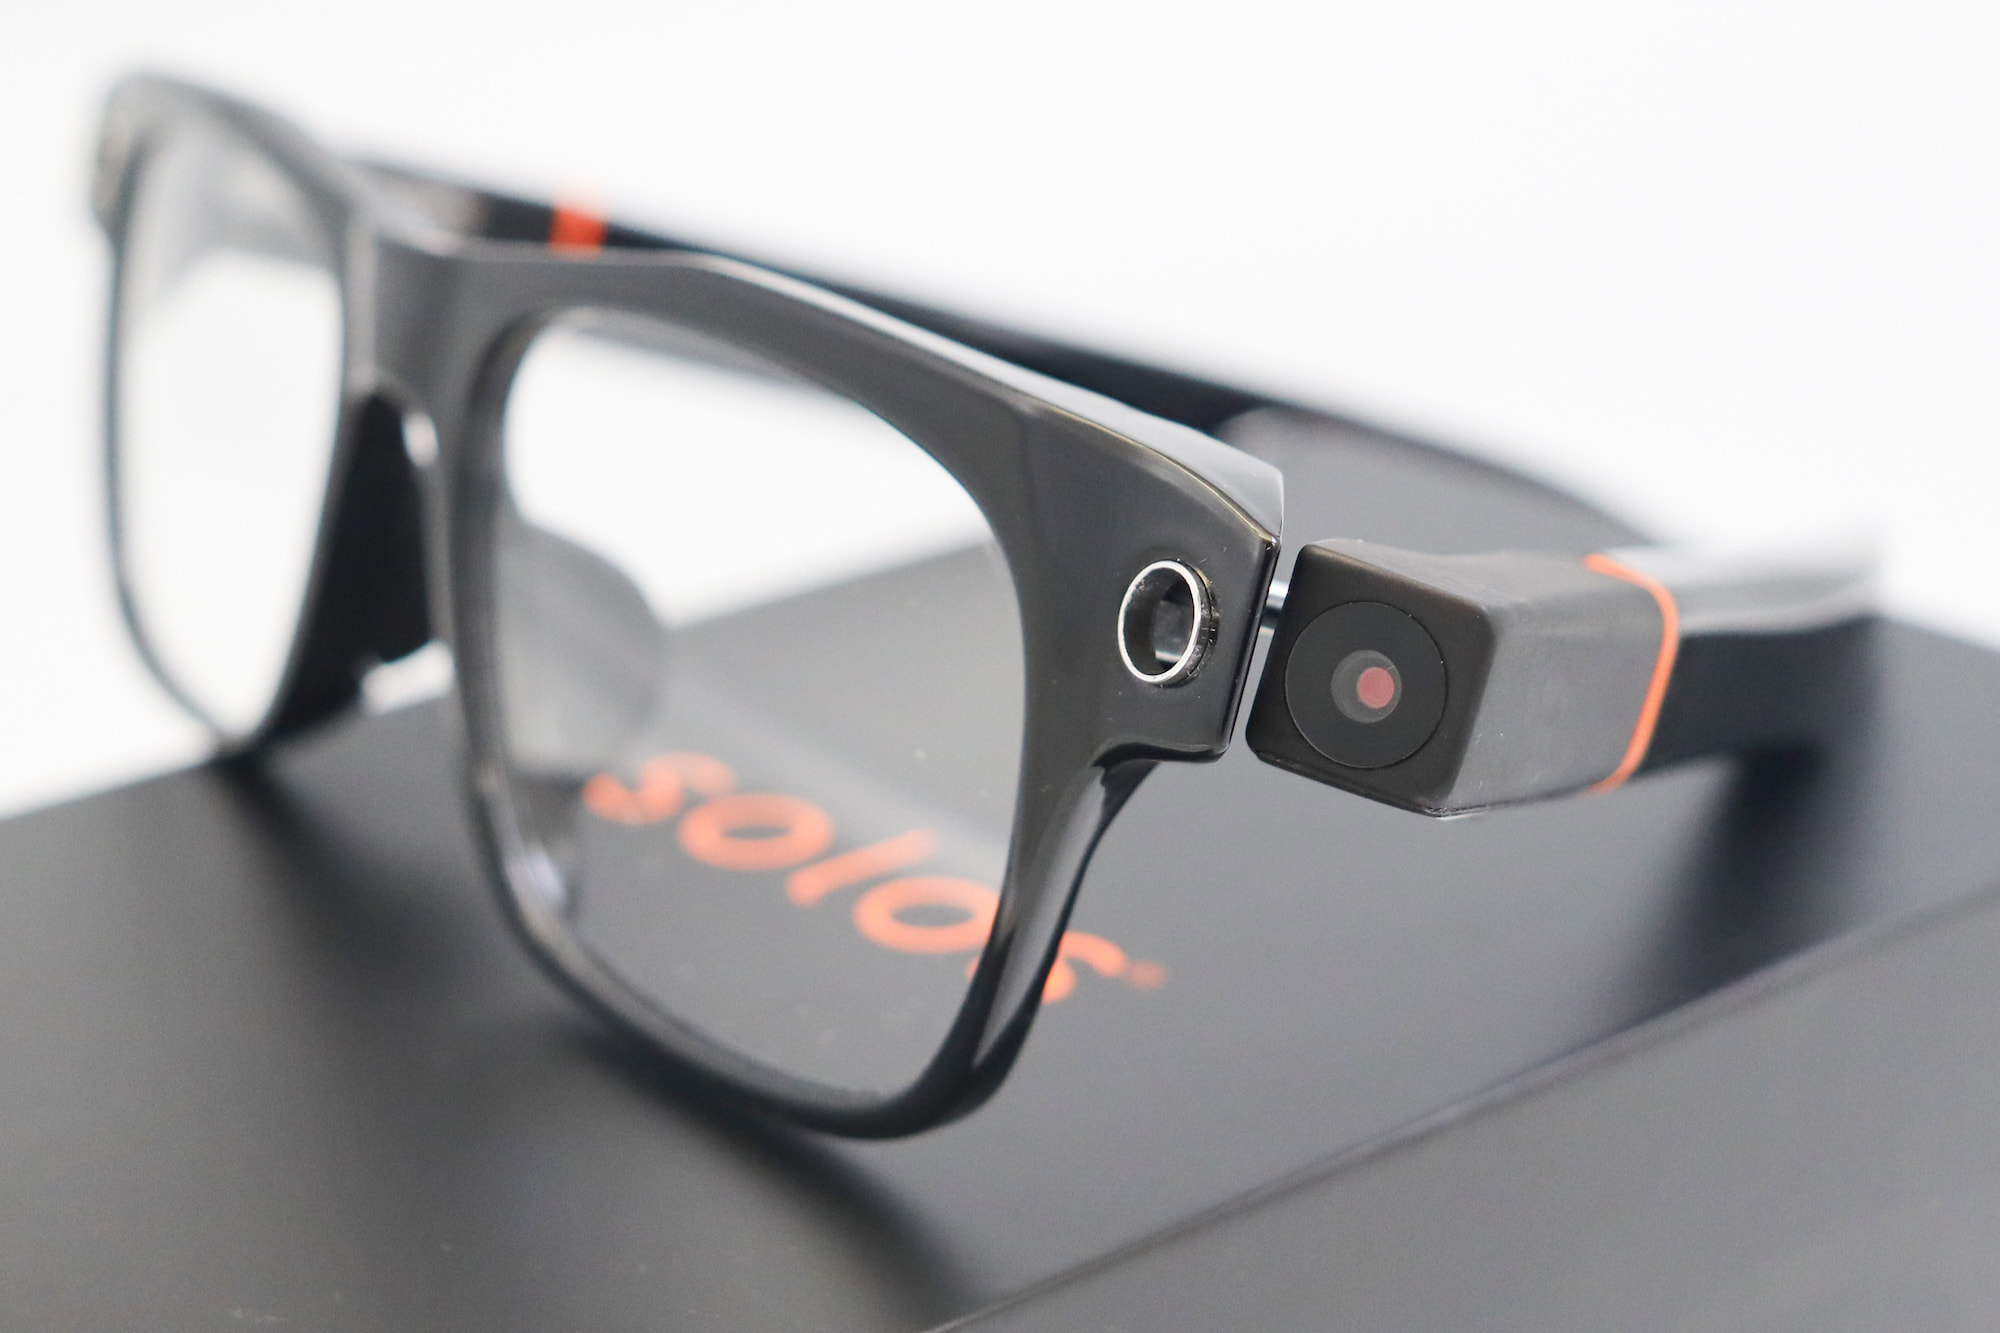 عینک هوشمند Solos AirGo Vision